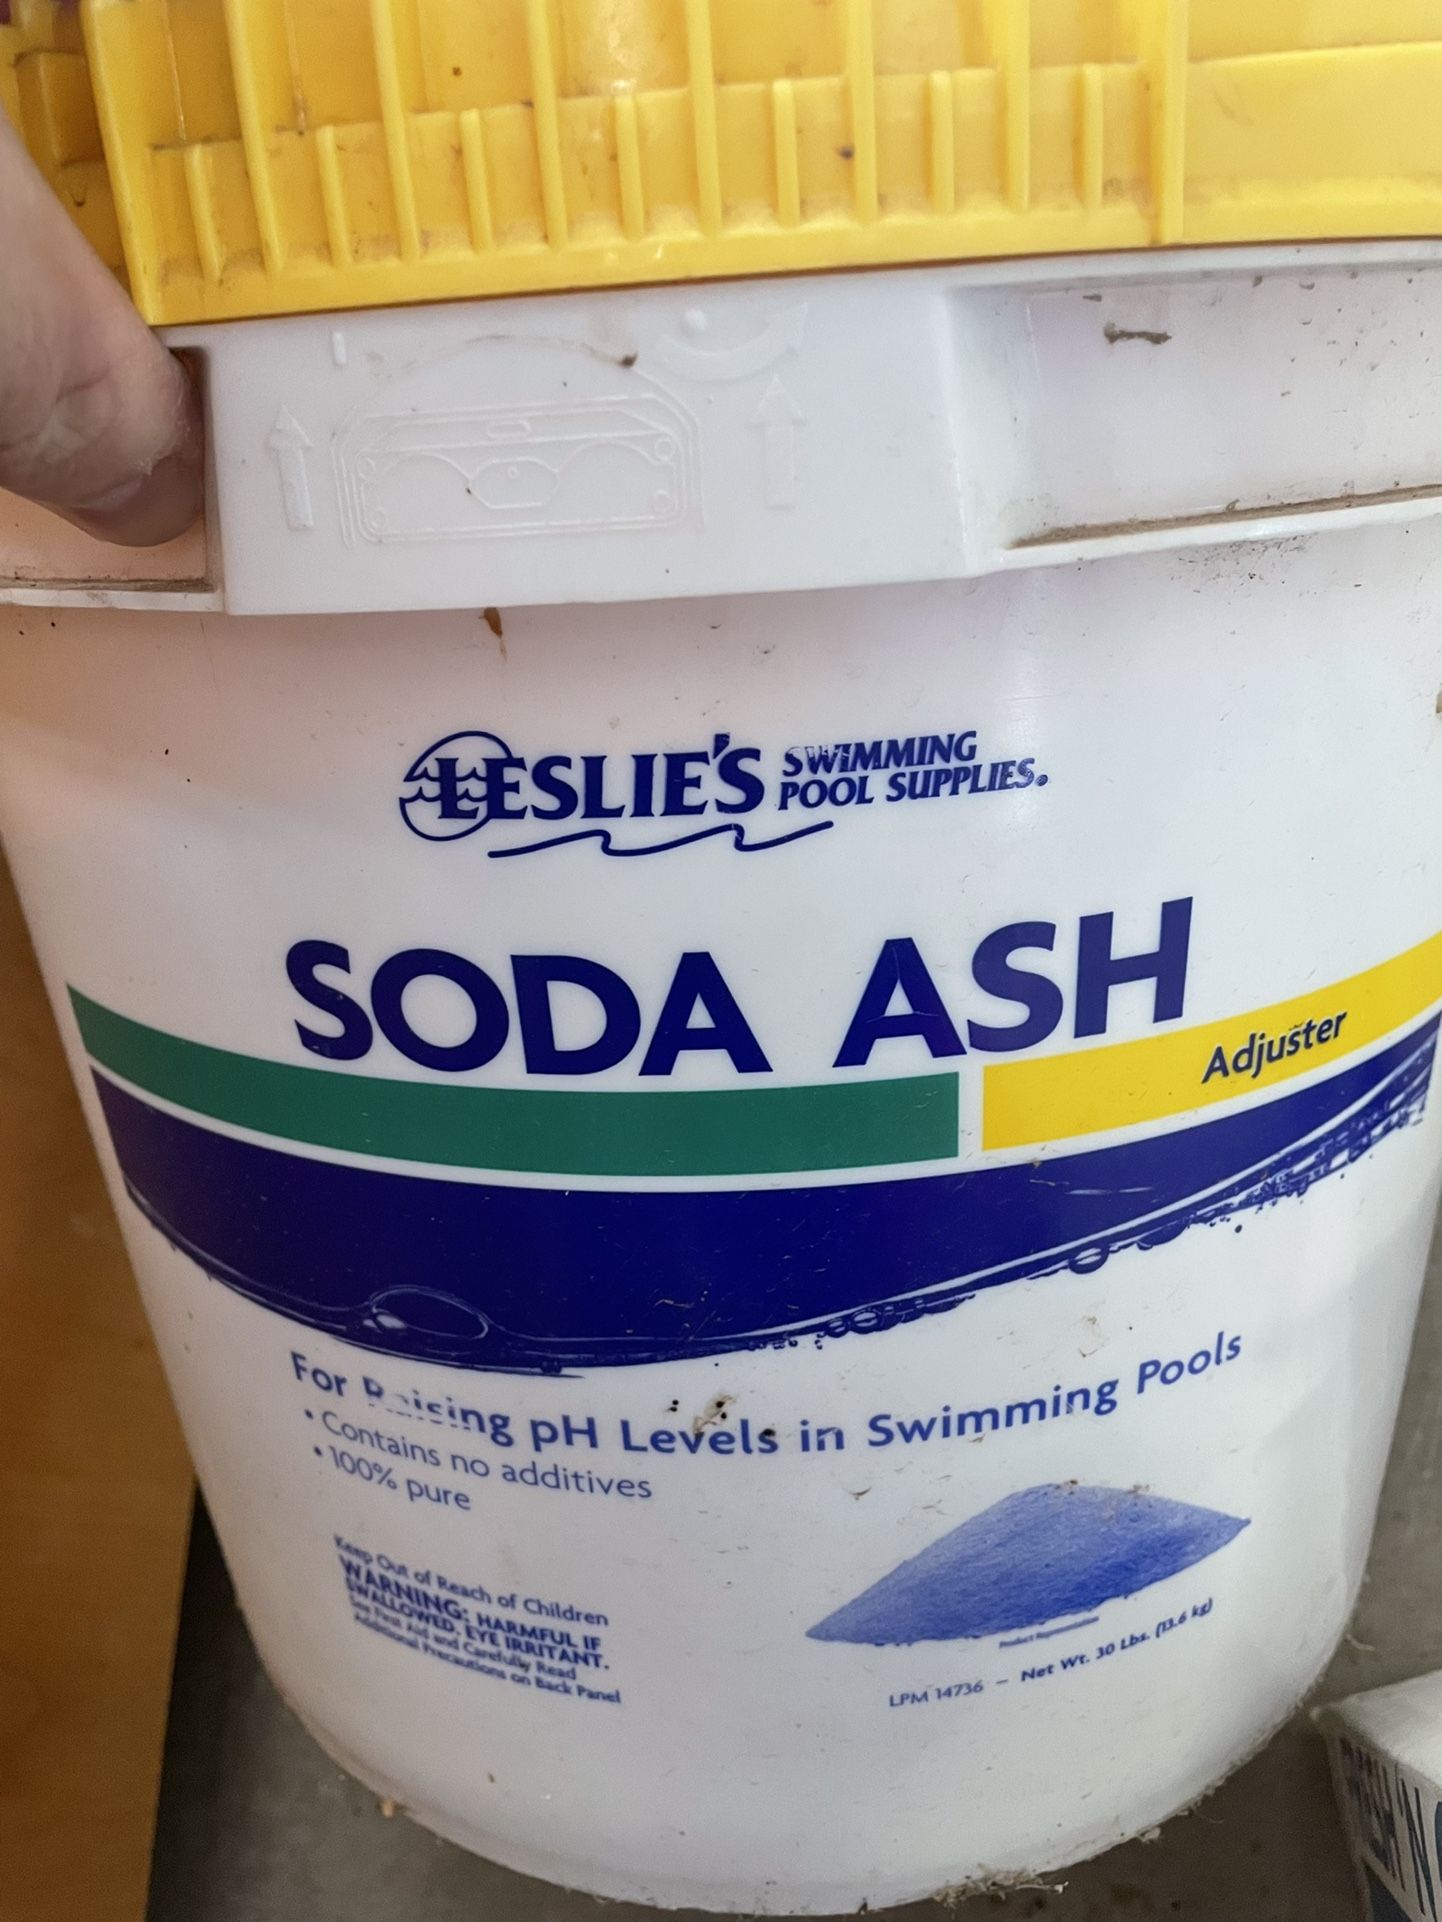 Leslie’s Soda Ash 30-lb Bucket w/ Sodium Carbonate - For Raising pH Levels - NIB!